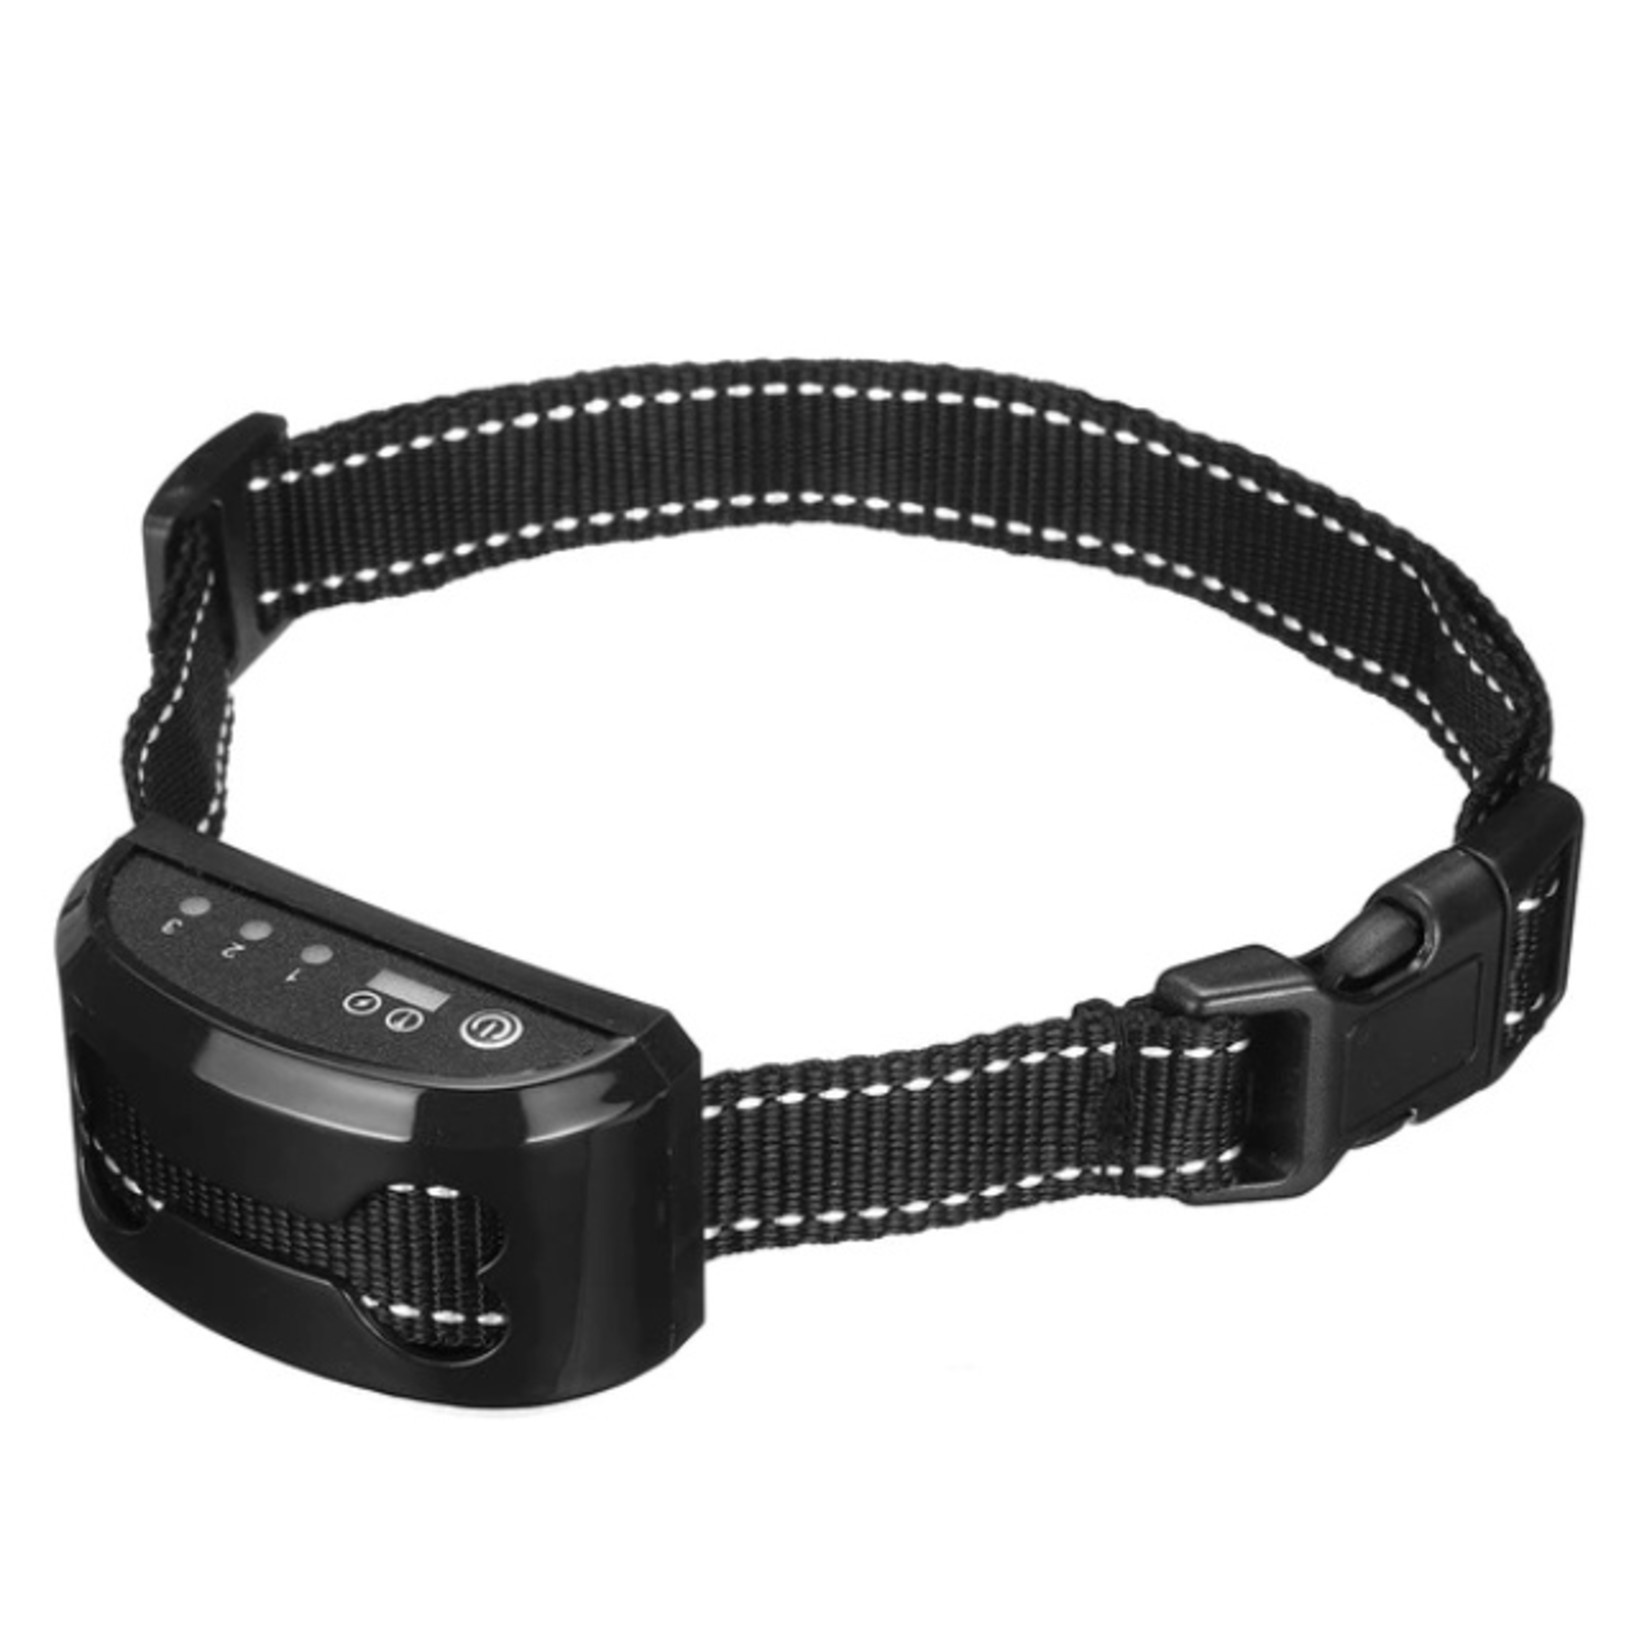 USB Oplaadbare Anti Blafband voor honden - Ultrasone honden Training Halsband - Trillingen Anti blafband - Blafcontrolehalsband voor honden